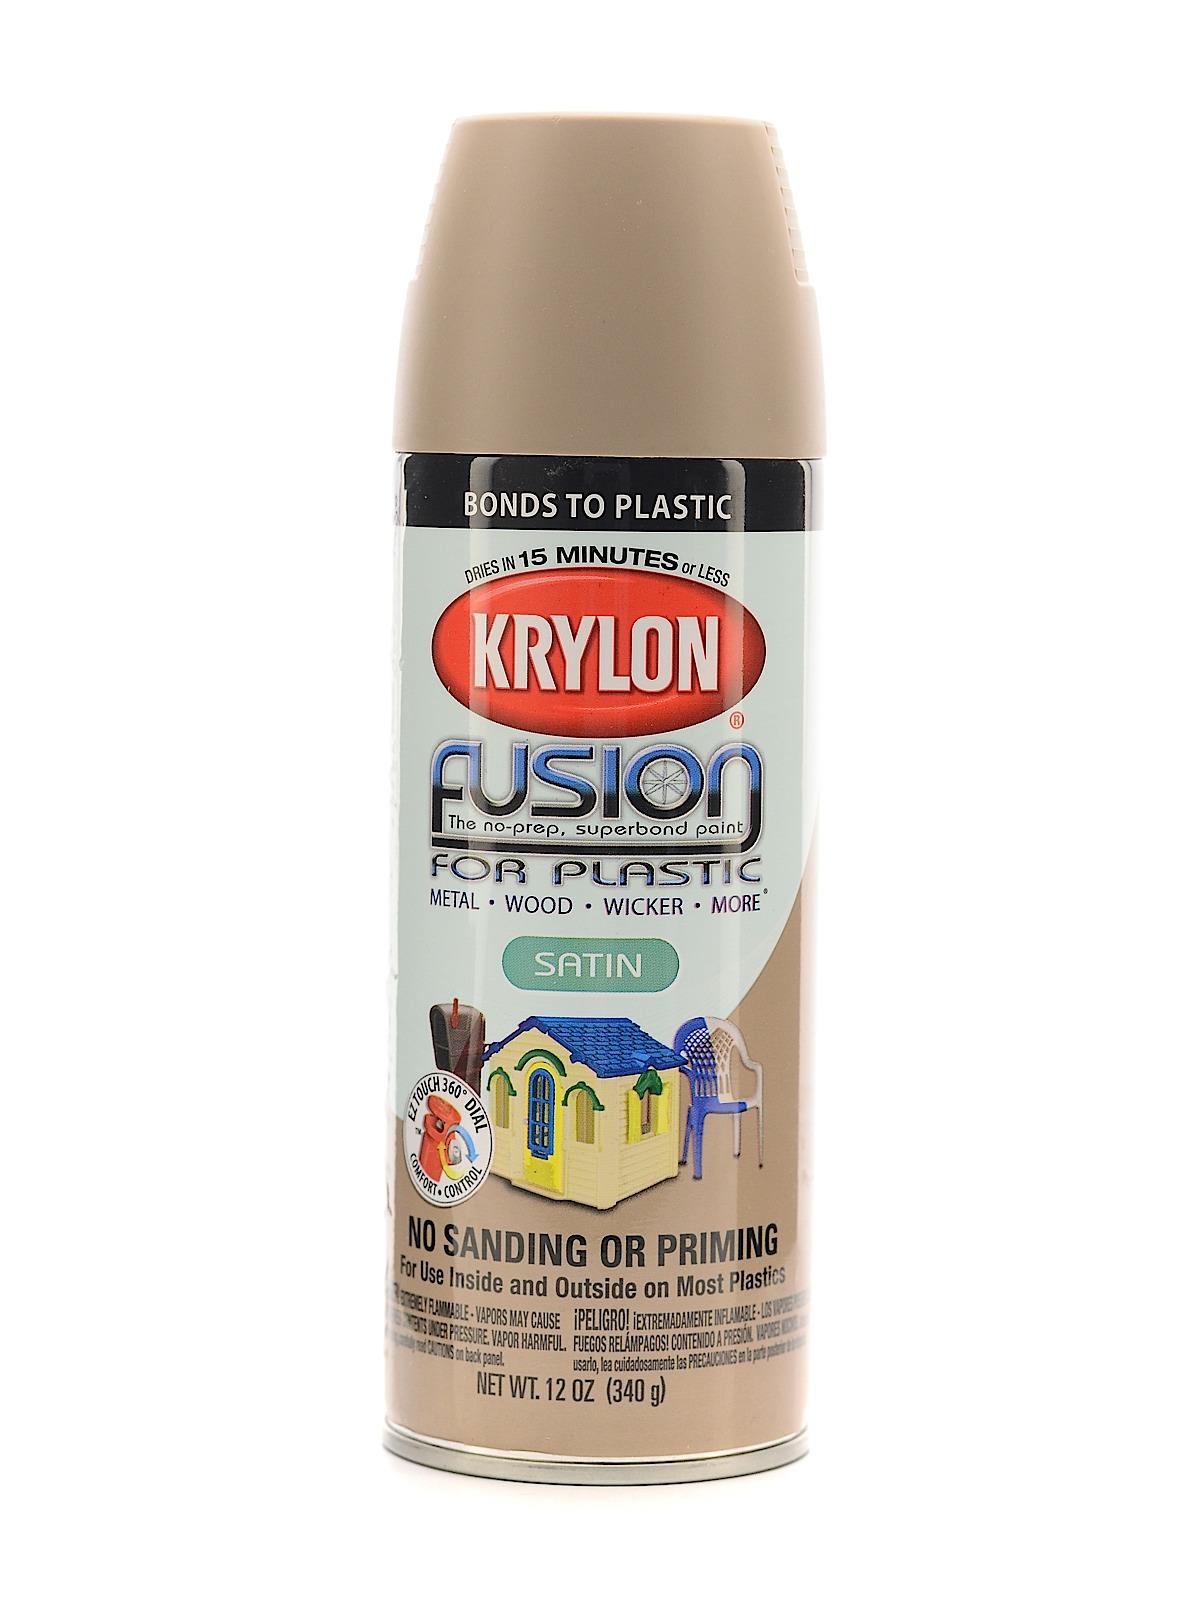 Krylon Fusion Spray Paint for Plastic khaki satin